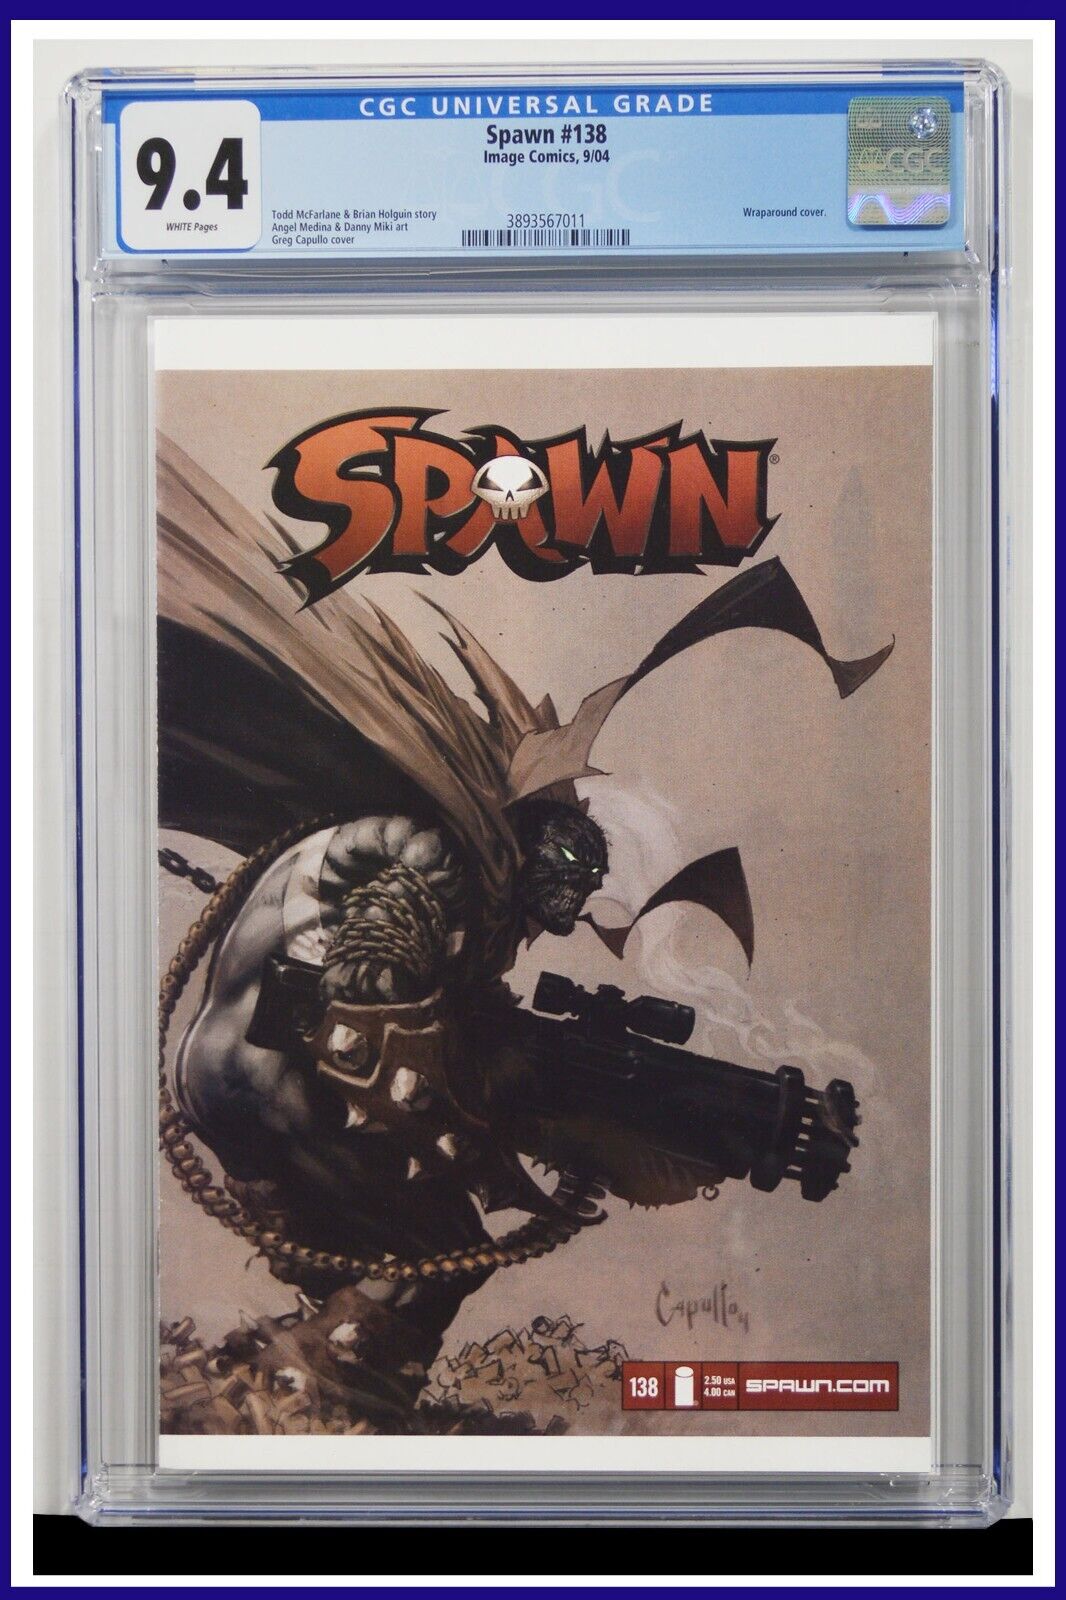 Spawn #138 CGC Graded 9.4 Image September 2004 Greg Capullo Cover Comic Book.